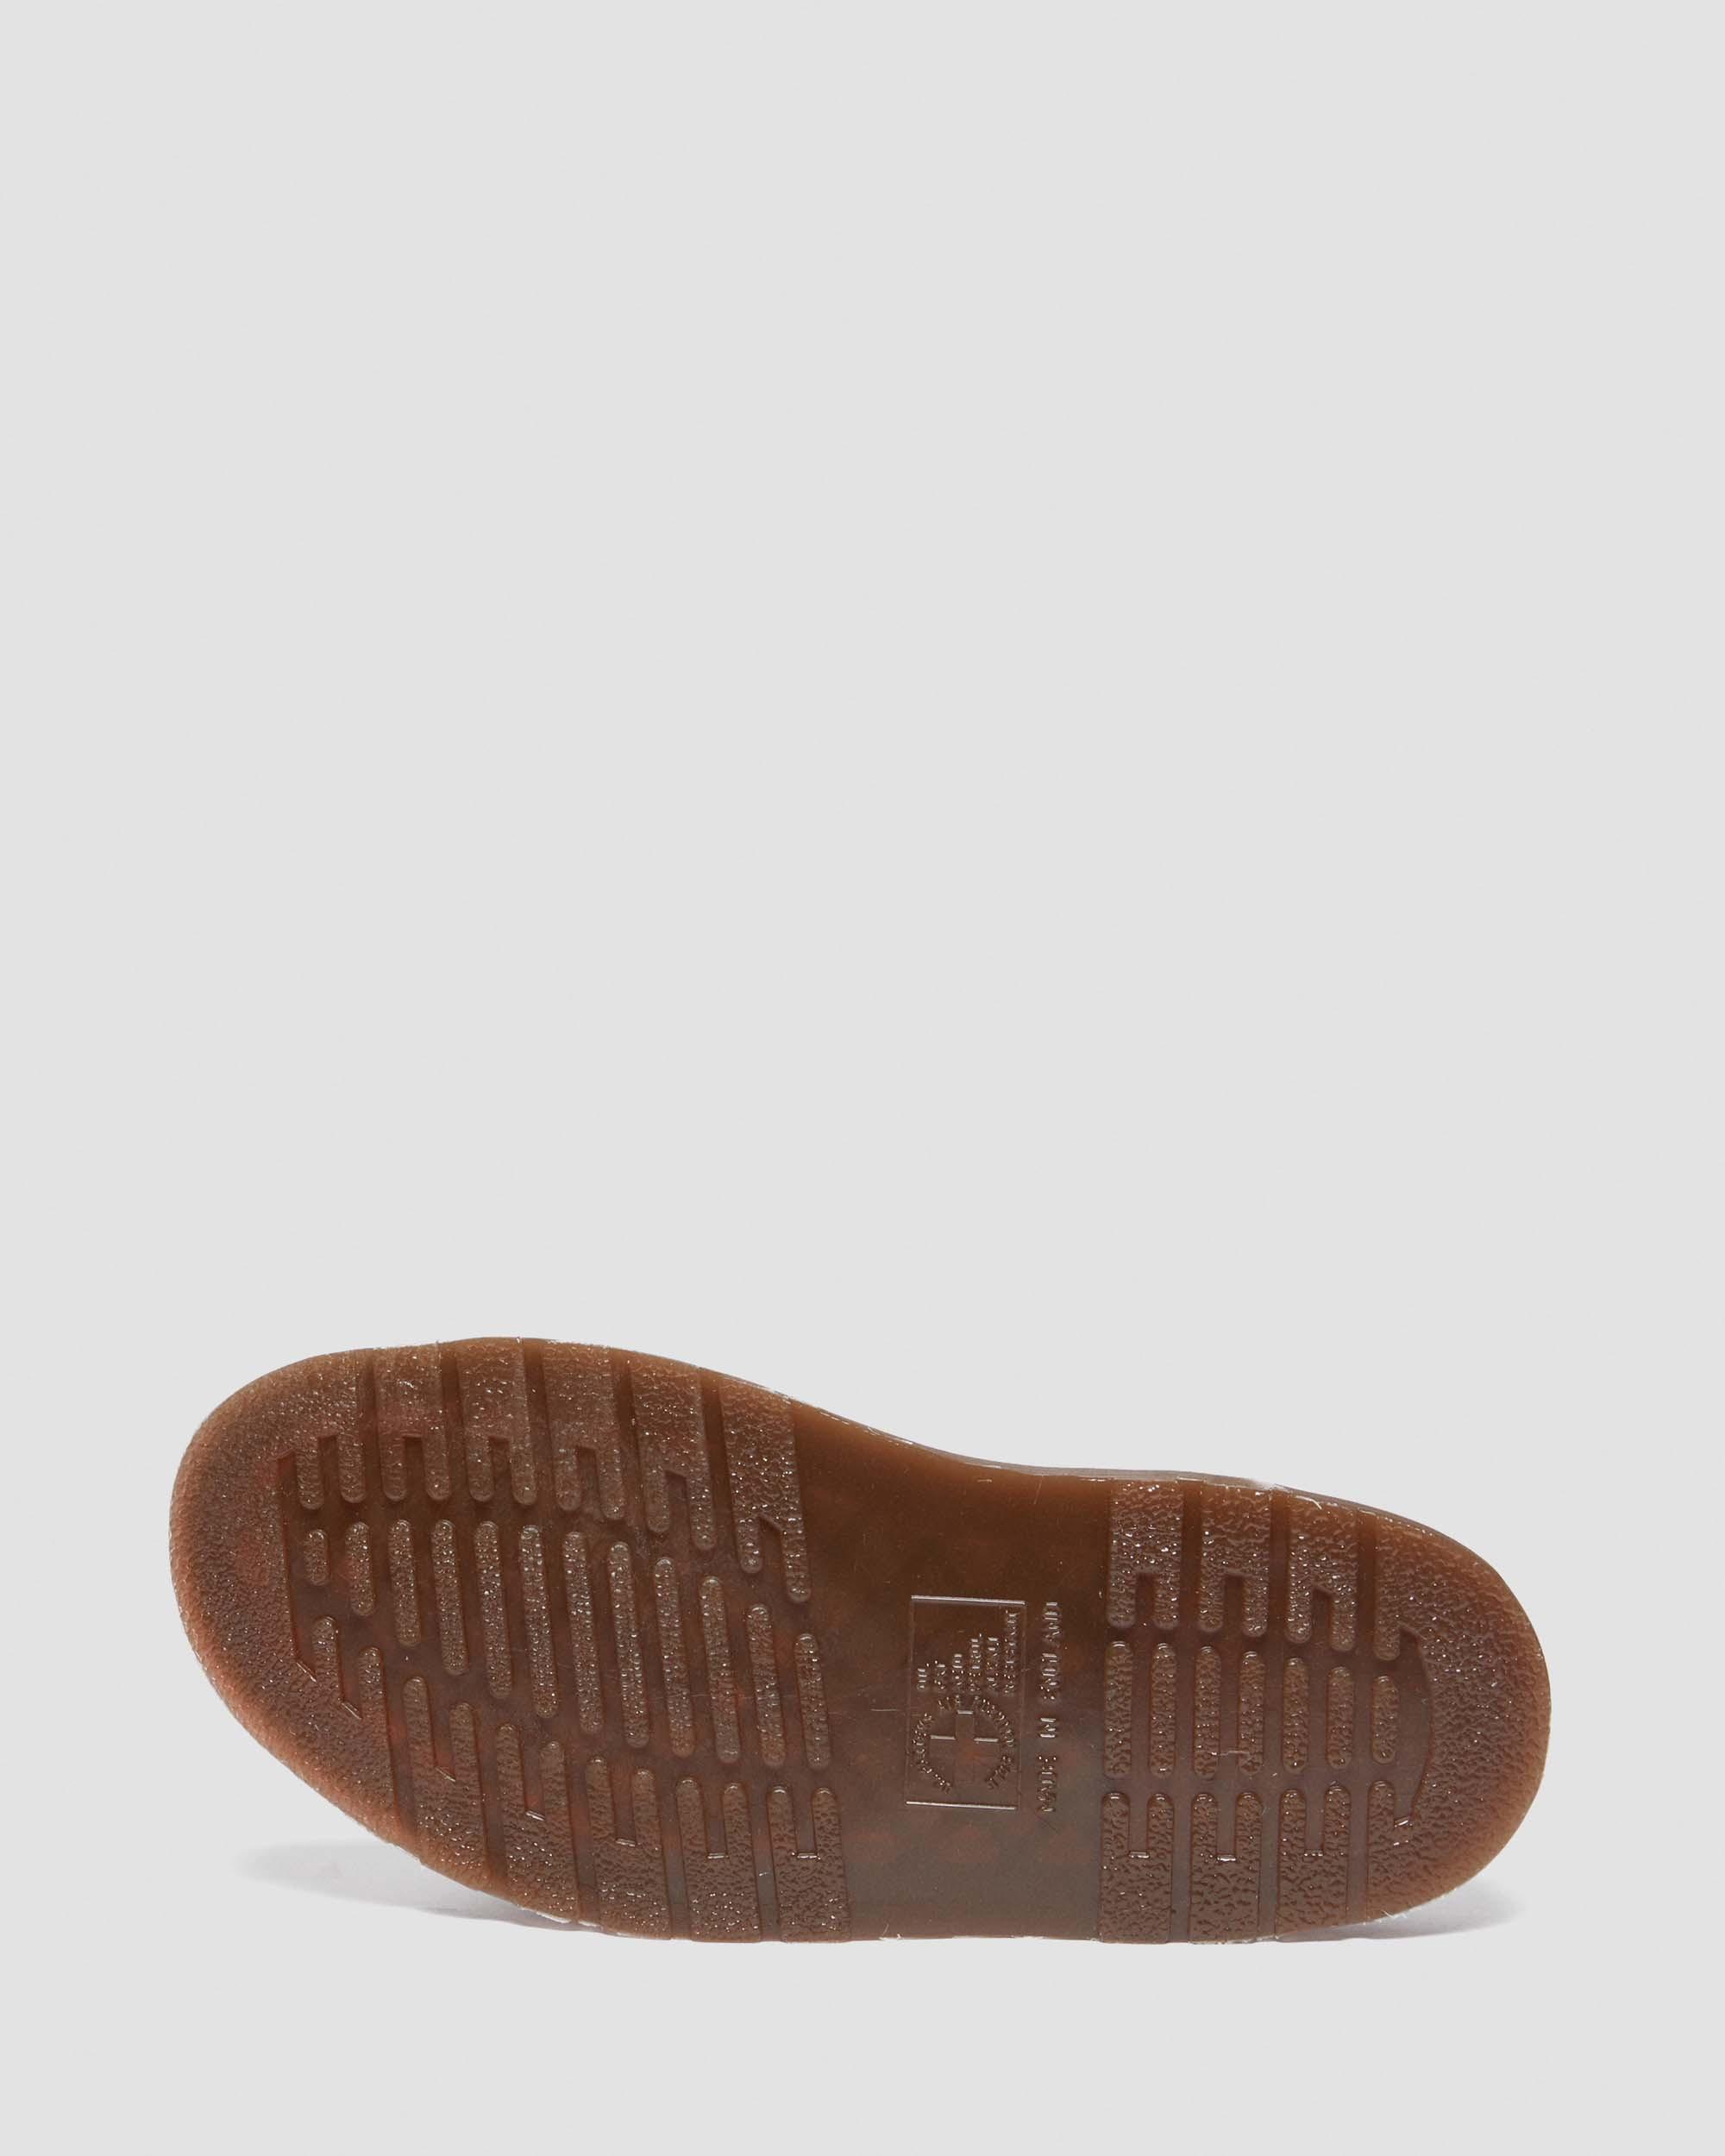 Dayne Made in England Leather & Suede Applique Slide Sandals in Black+Brown+Rust Orange